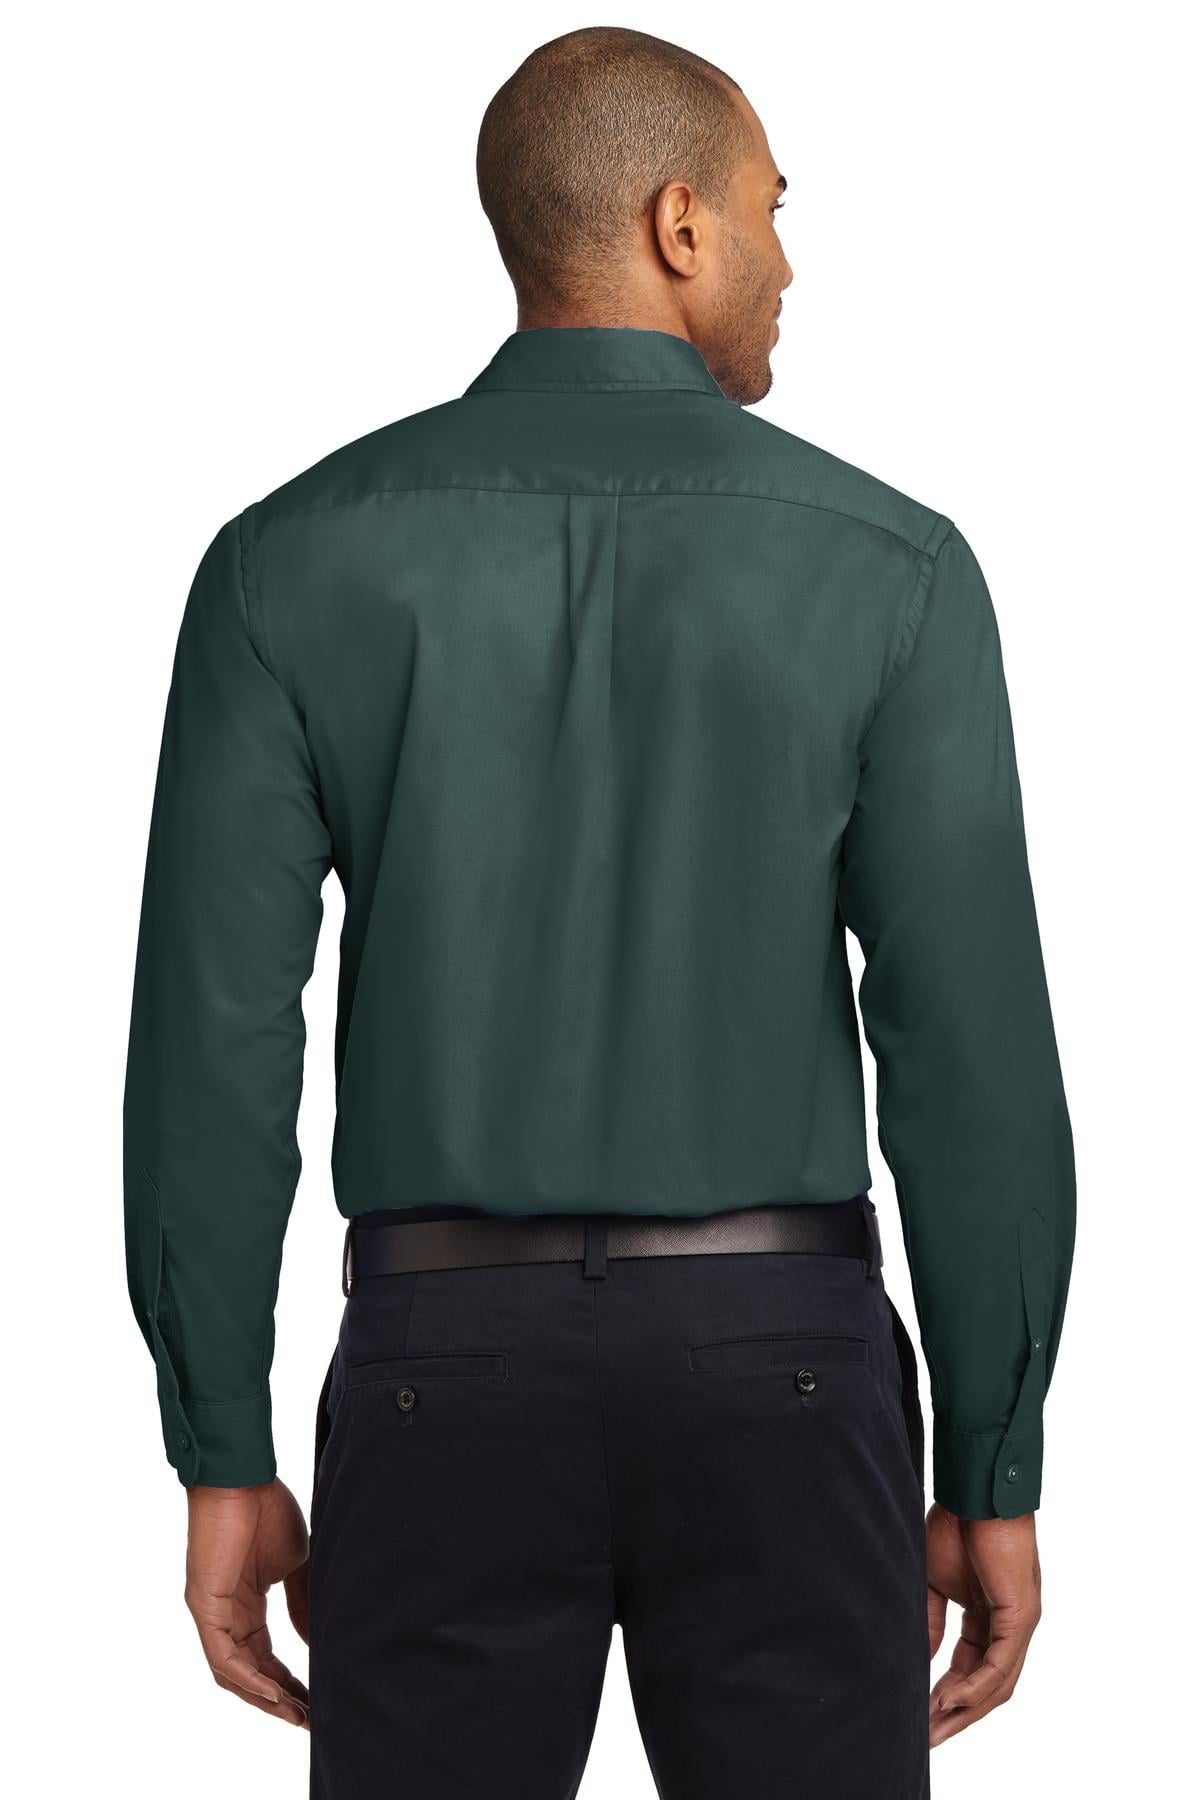 Port Authority Long Sleeve Easy Care Shirt-4XL (Dark Green/Navy)